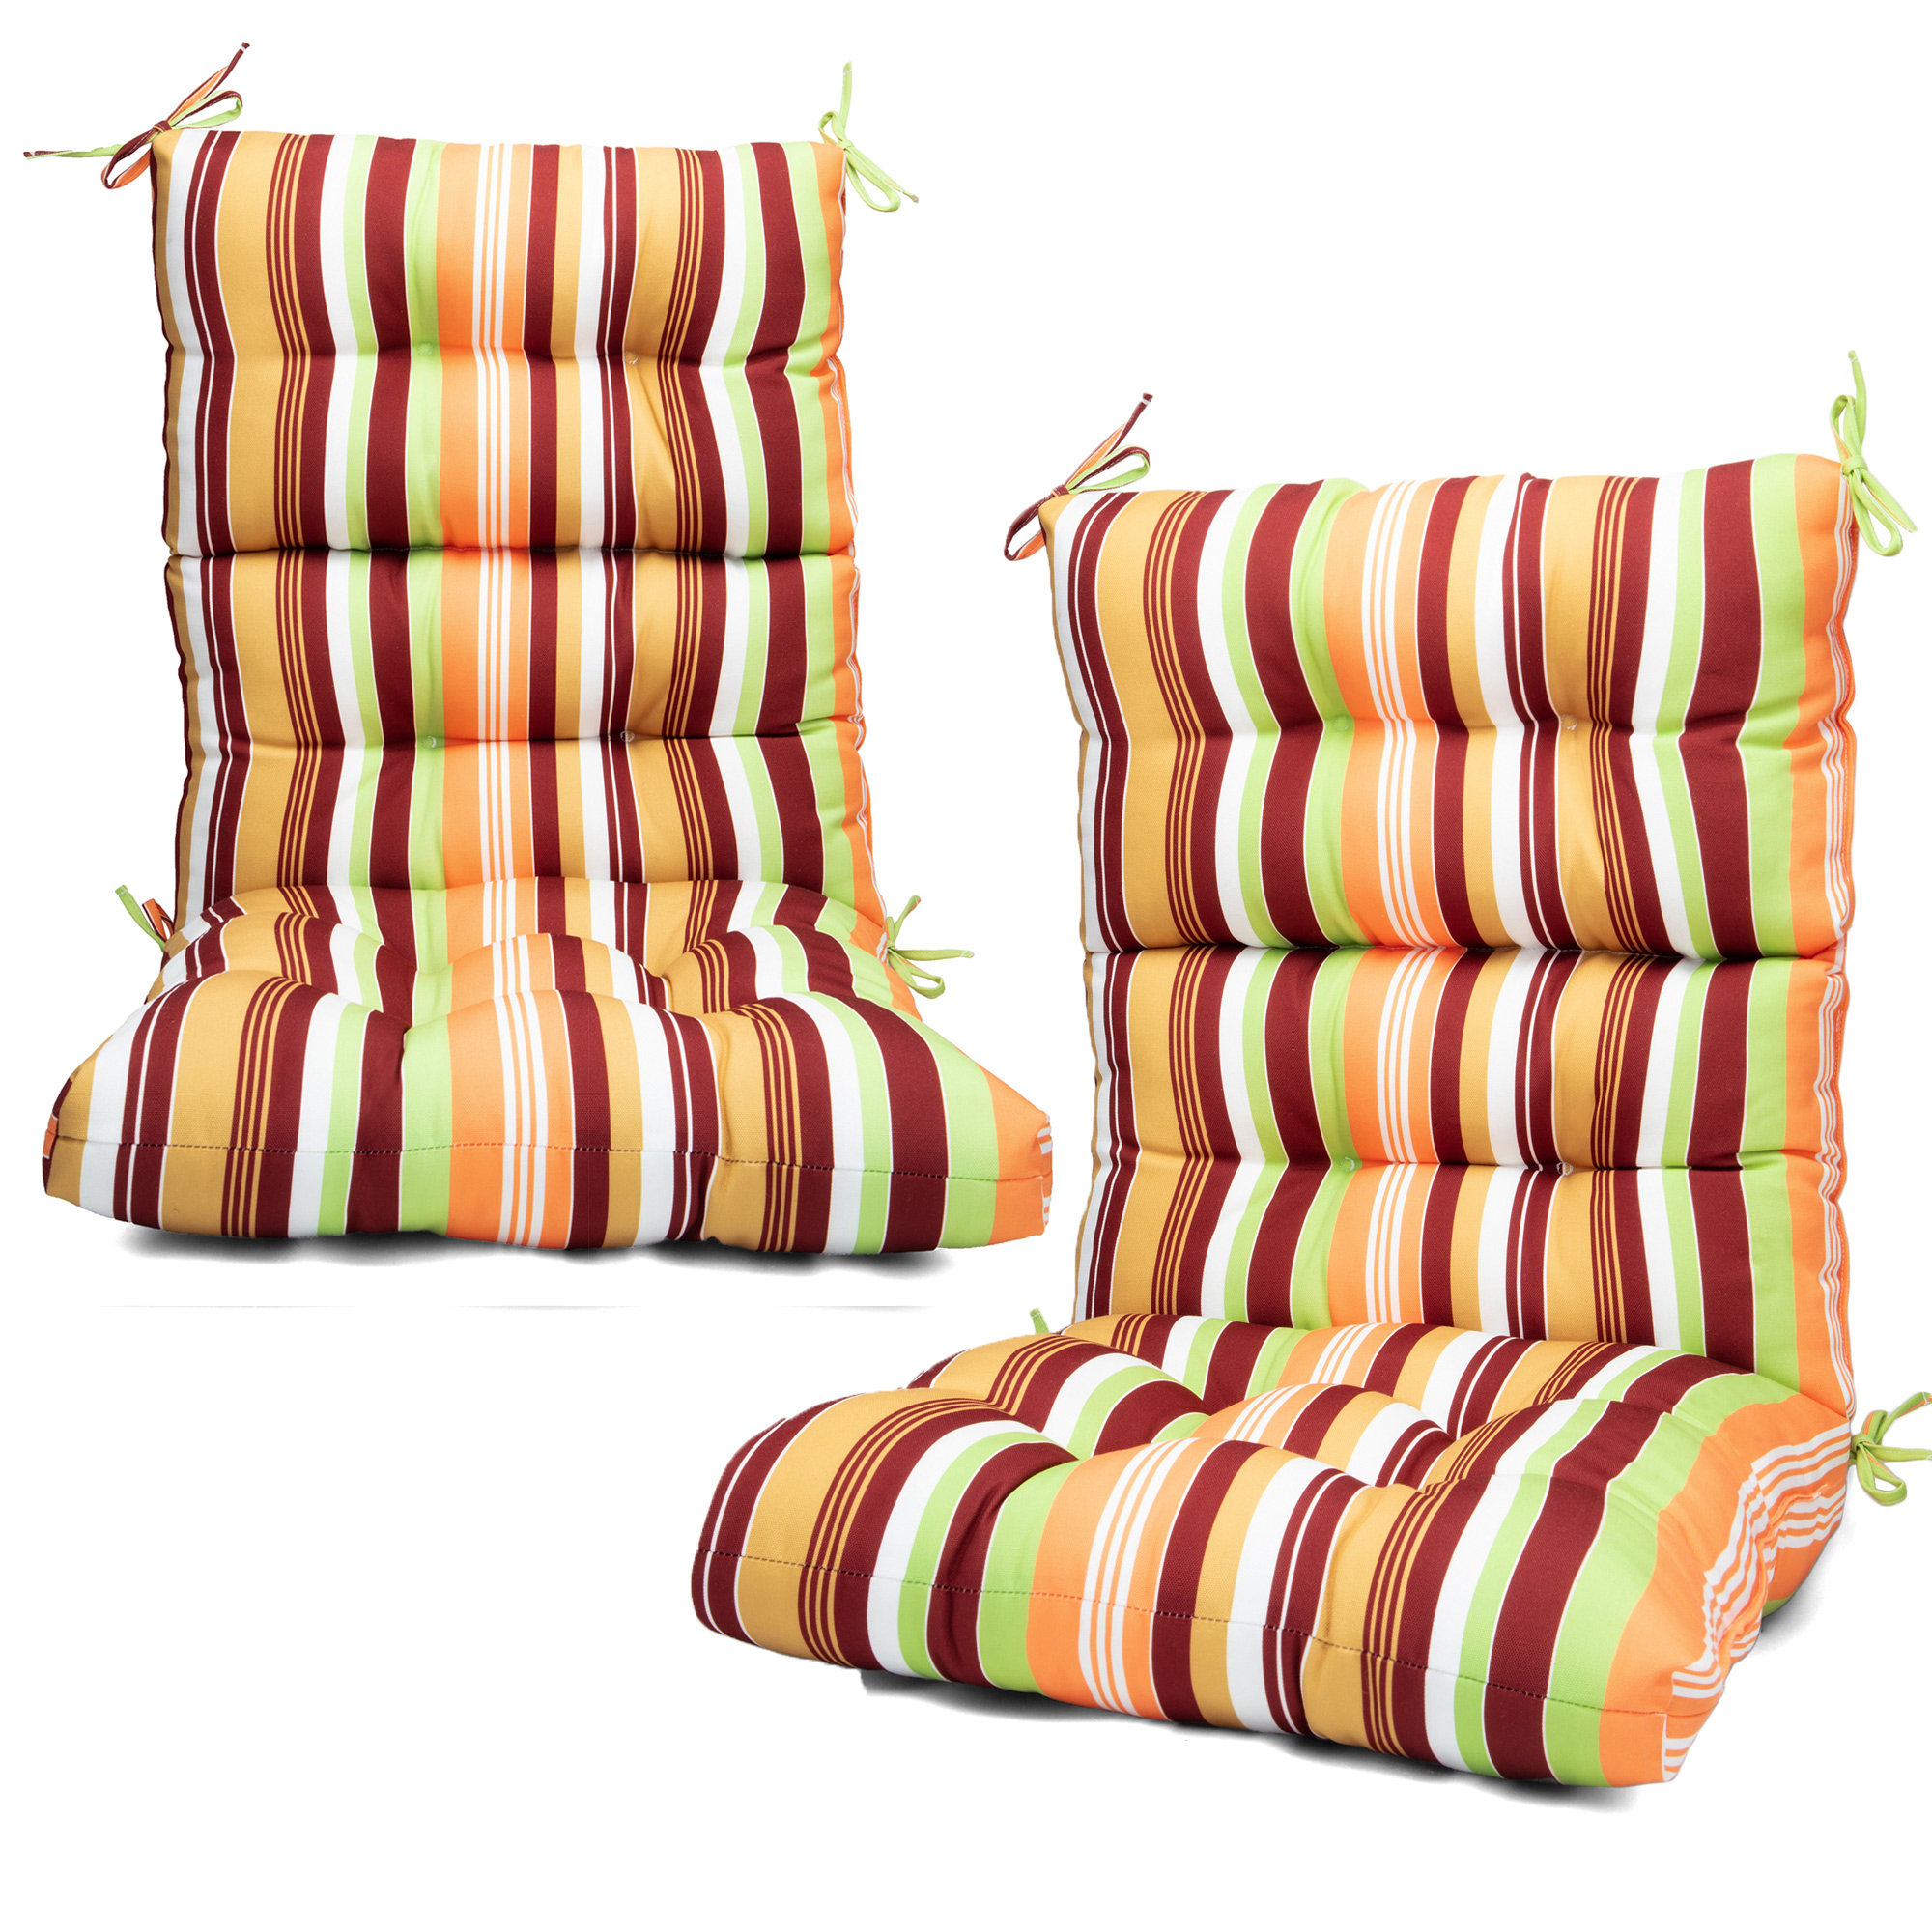 44x21 inch Outdoor Chair Cushion, 2/4pcs High Back Chair Cushions Patio Garden High Rebound Foam Chair Cushion  Waterproof Polyester Seat Cushions or Home Patio Garden Decor - image 1 of 8